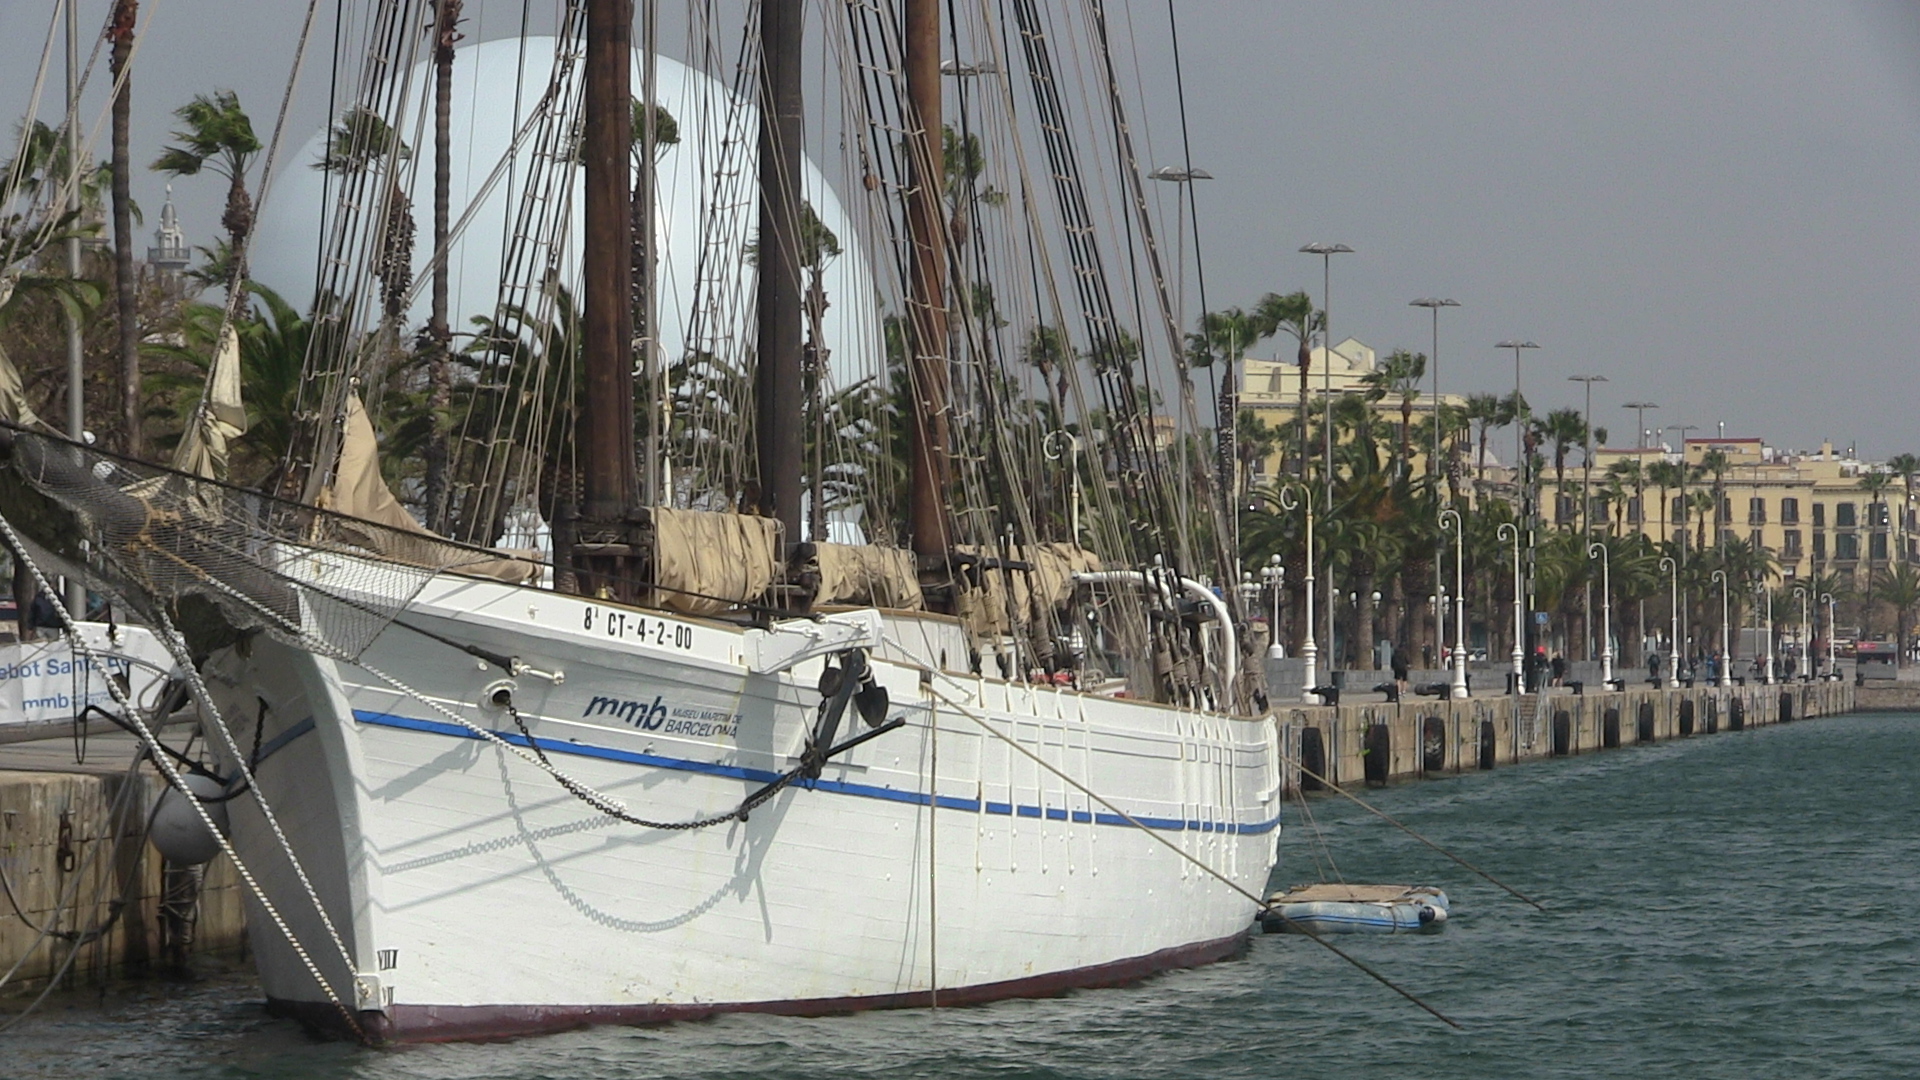 Sailboat in the Port of Barcelona, Spain